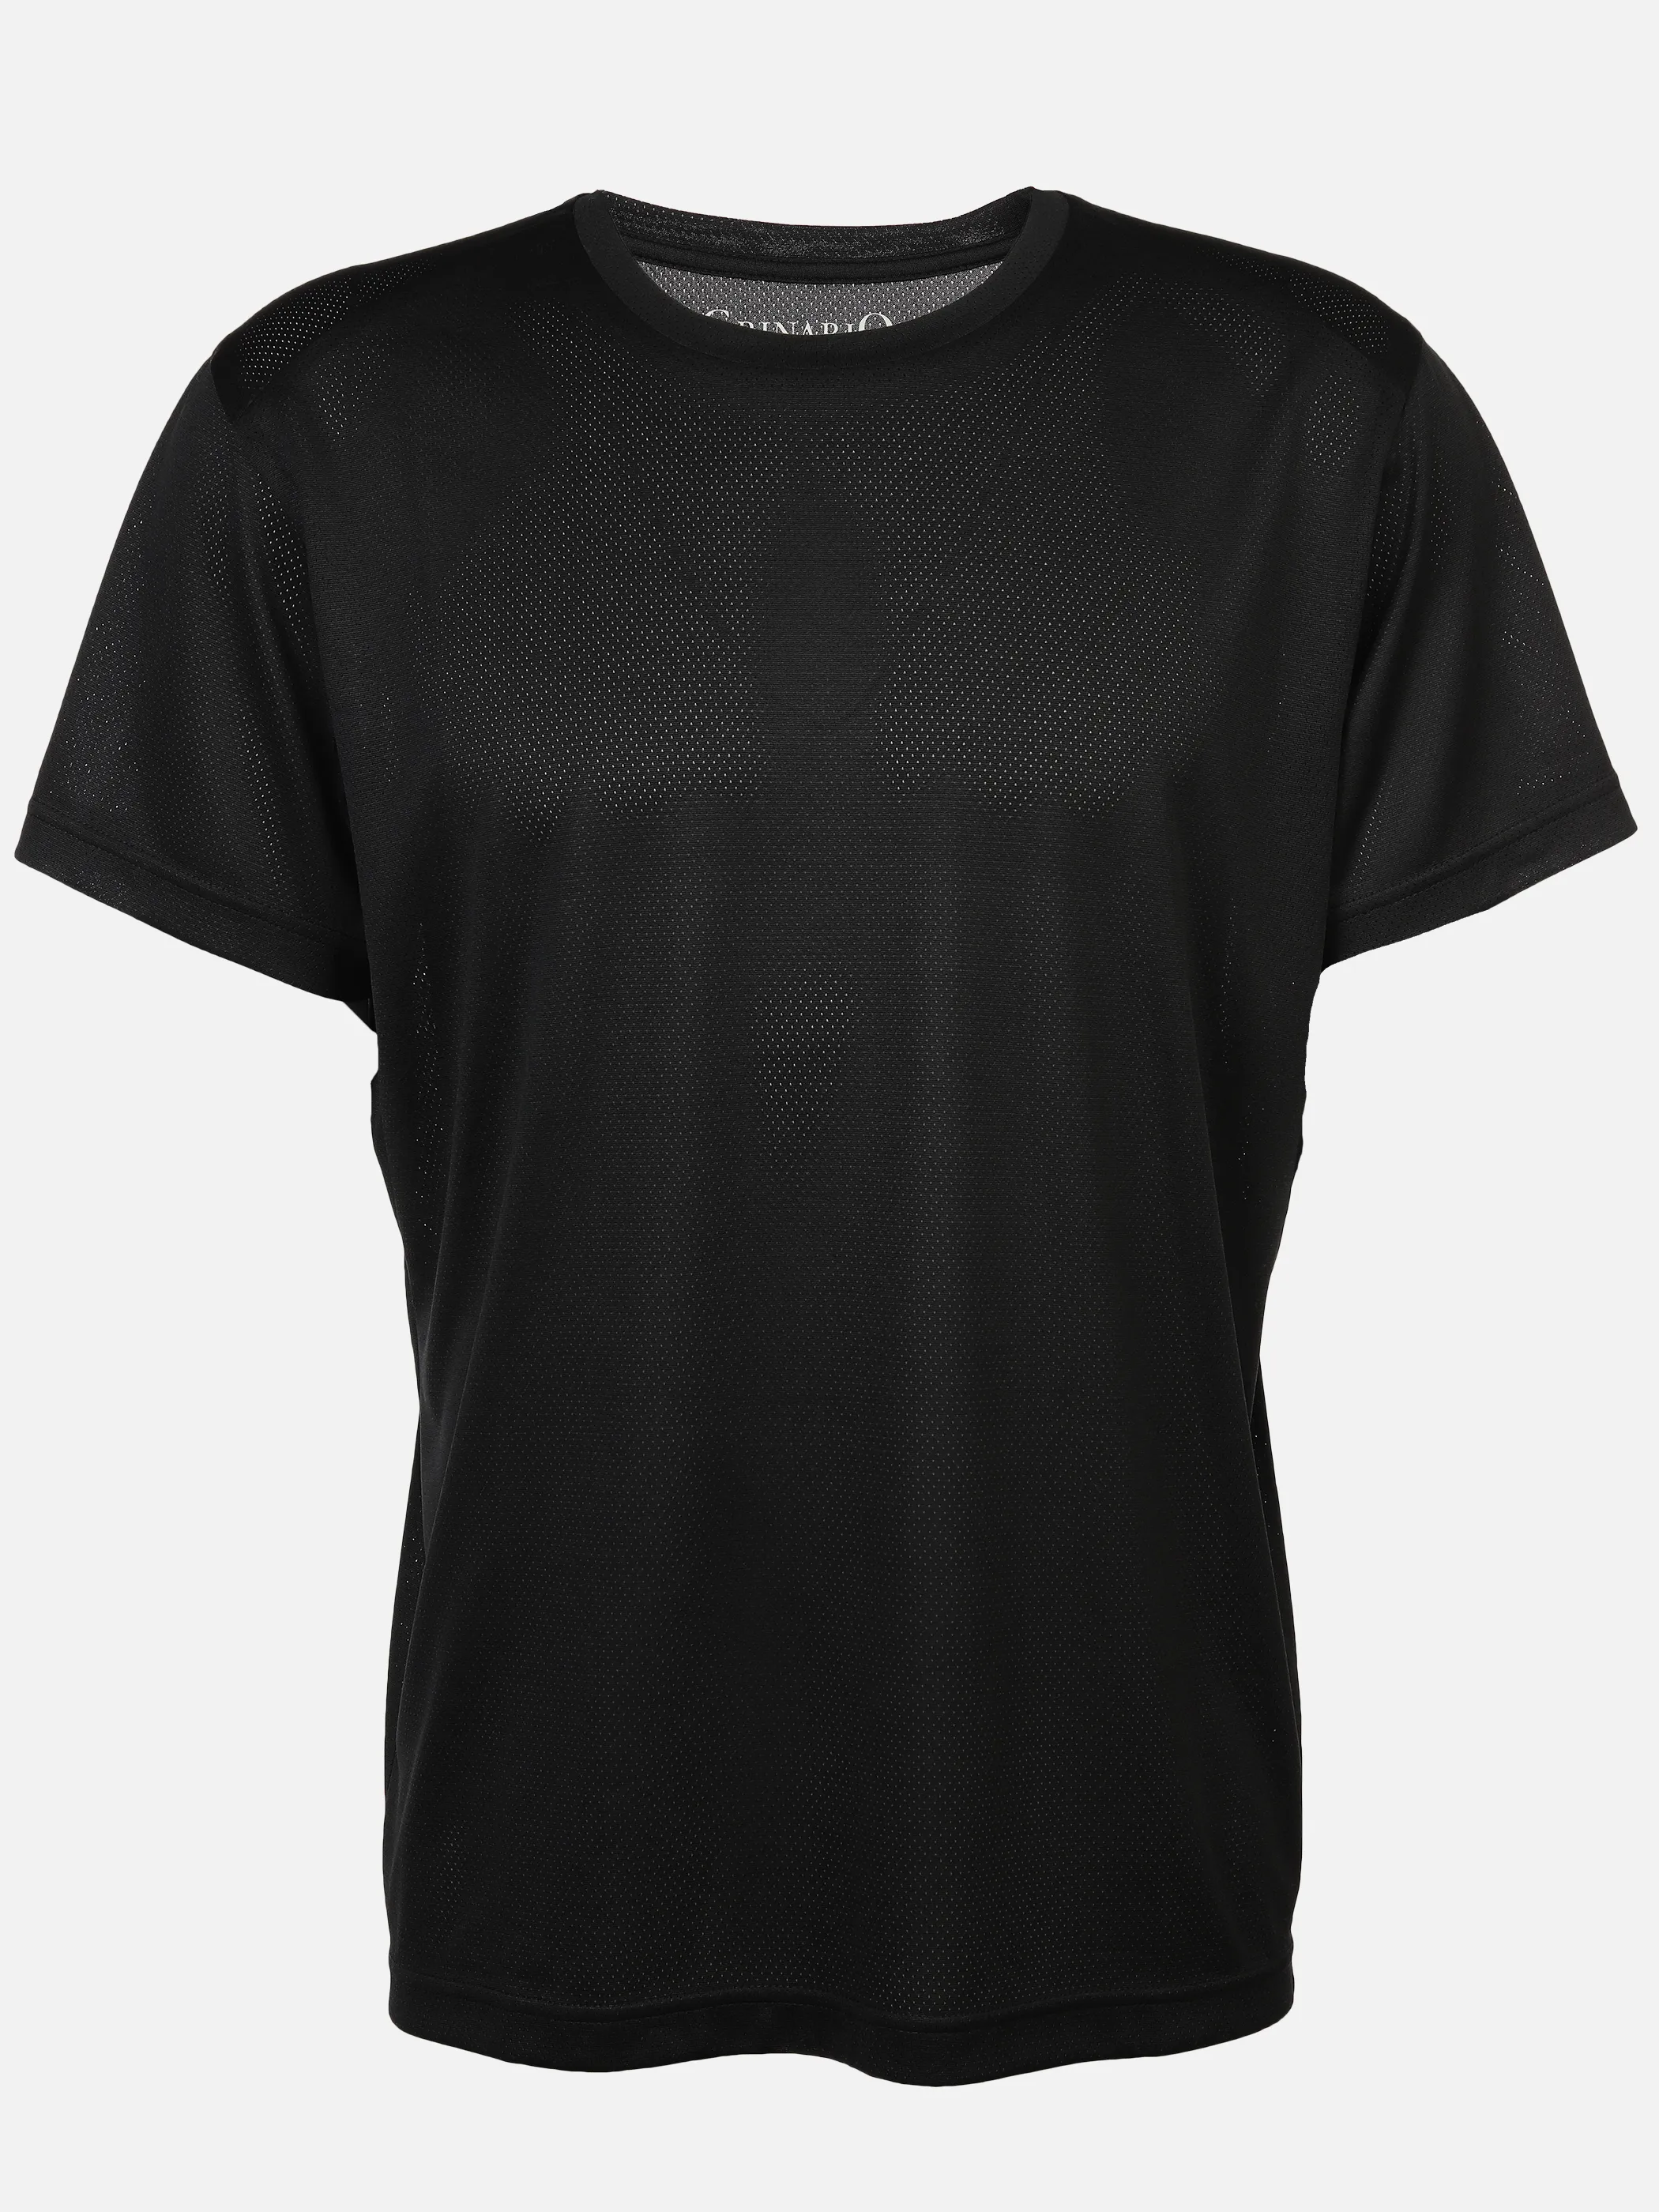 Grinario Sports He- Sport T-Shirt Schwarz 890157 BLACK 1